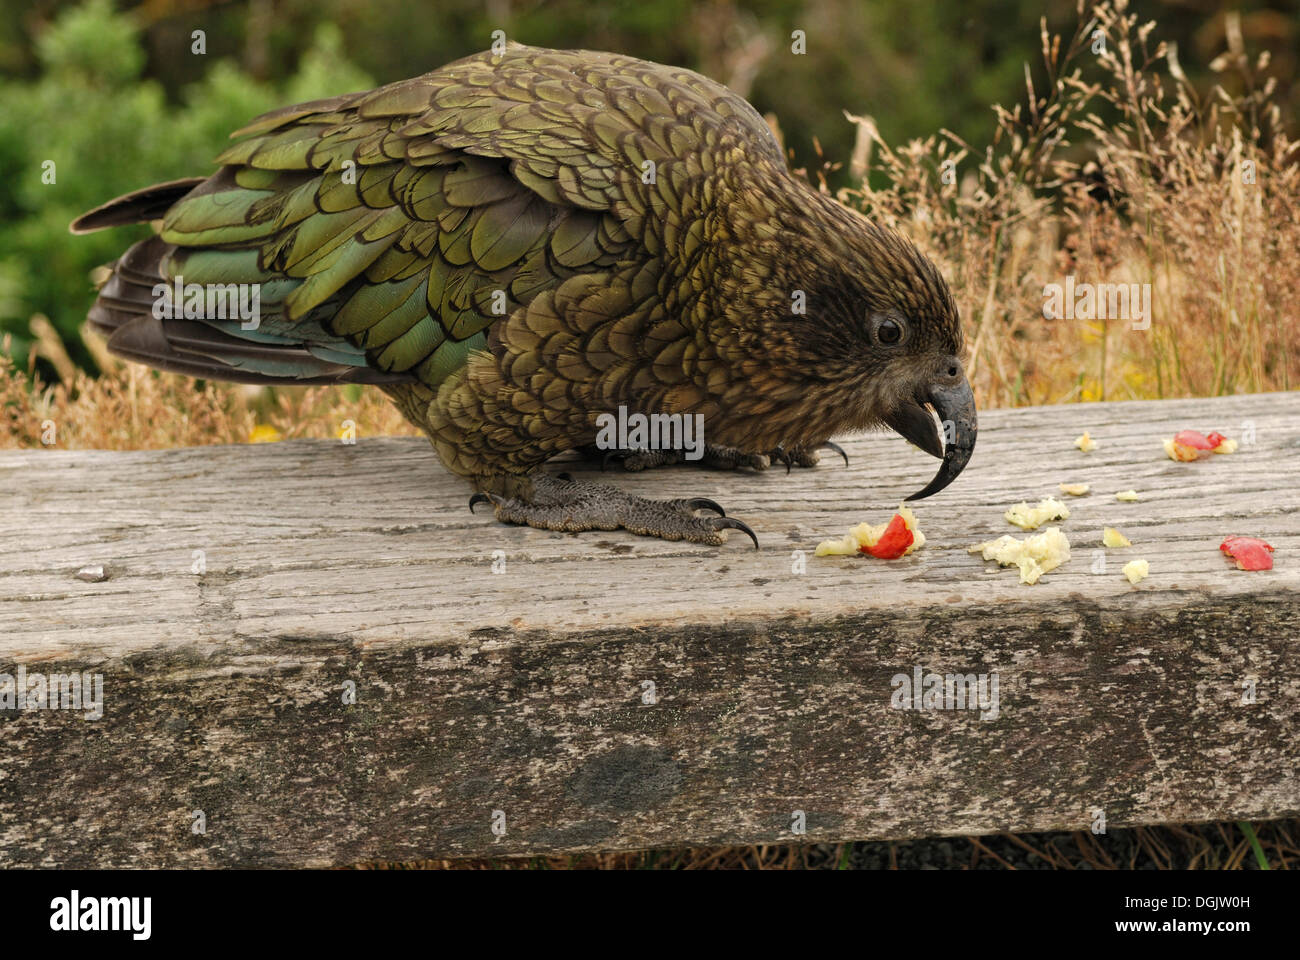 Kea (Nestor notabilis) eating an apple, Fiordland National Park, South Island, New Zealand Stock Photo